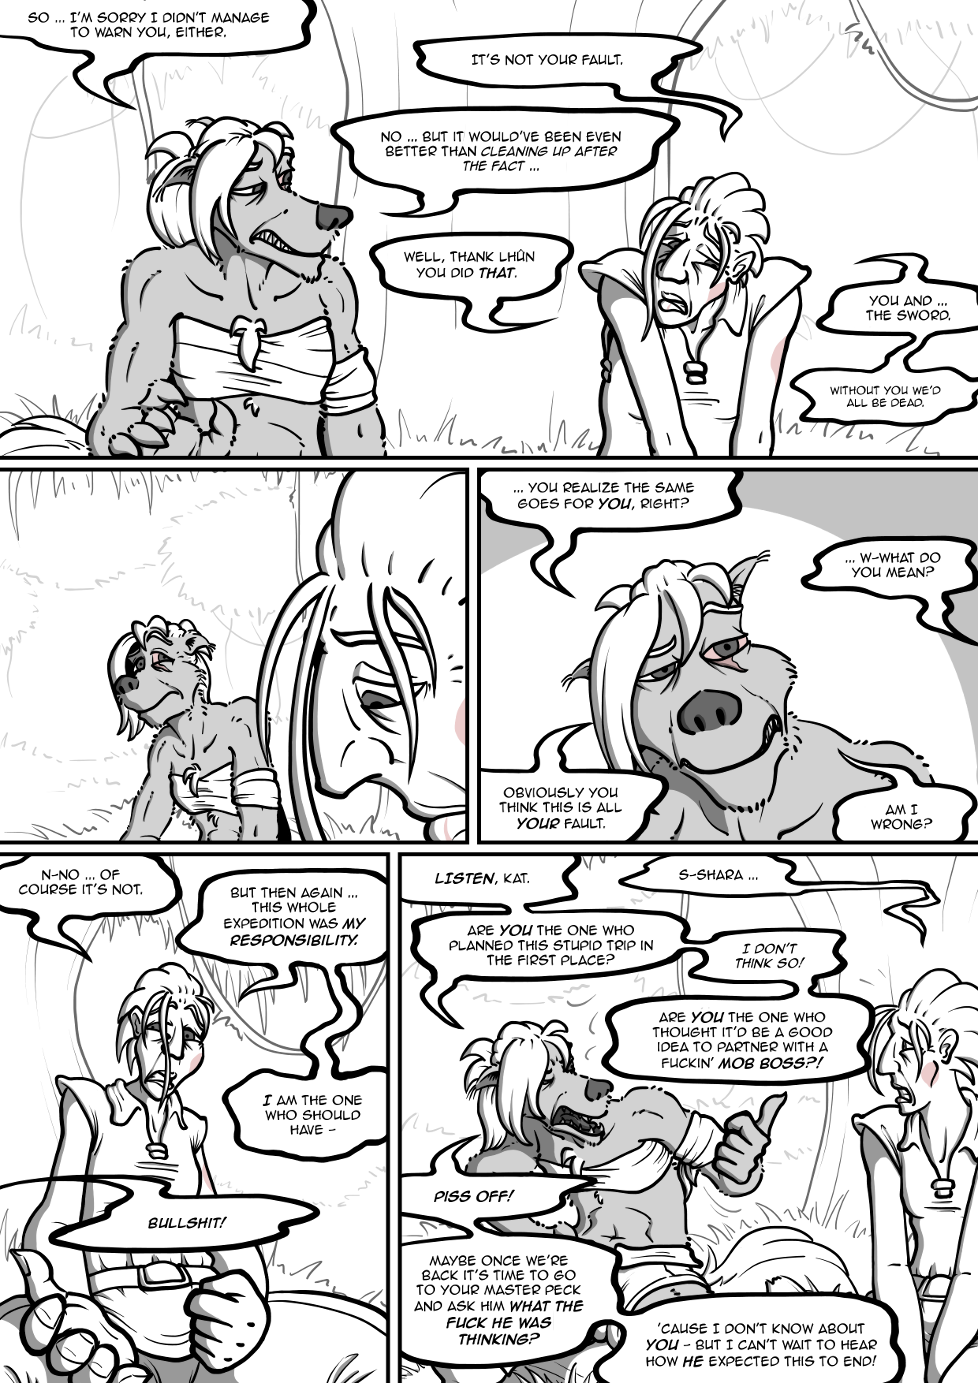 Page 447: The one where Shara calls bullshit!